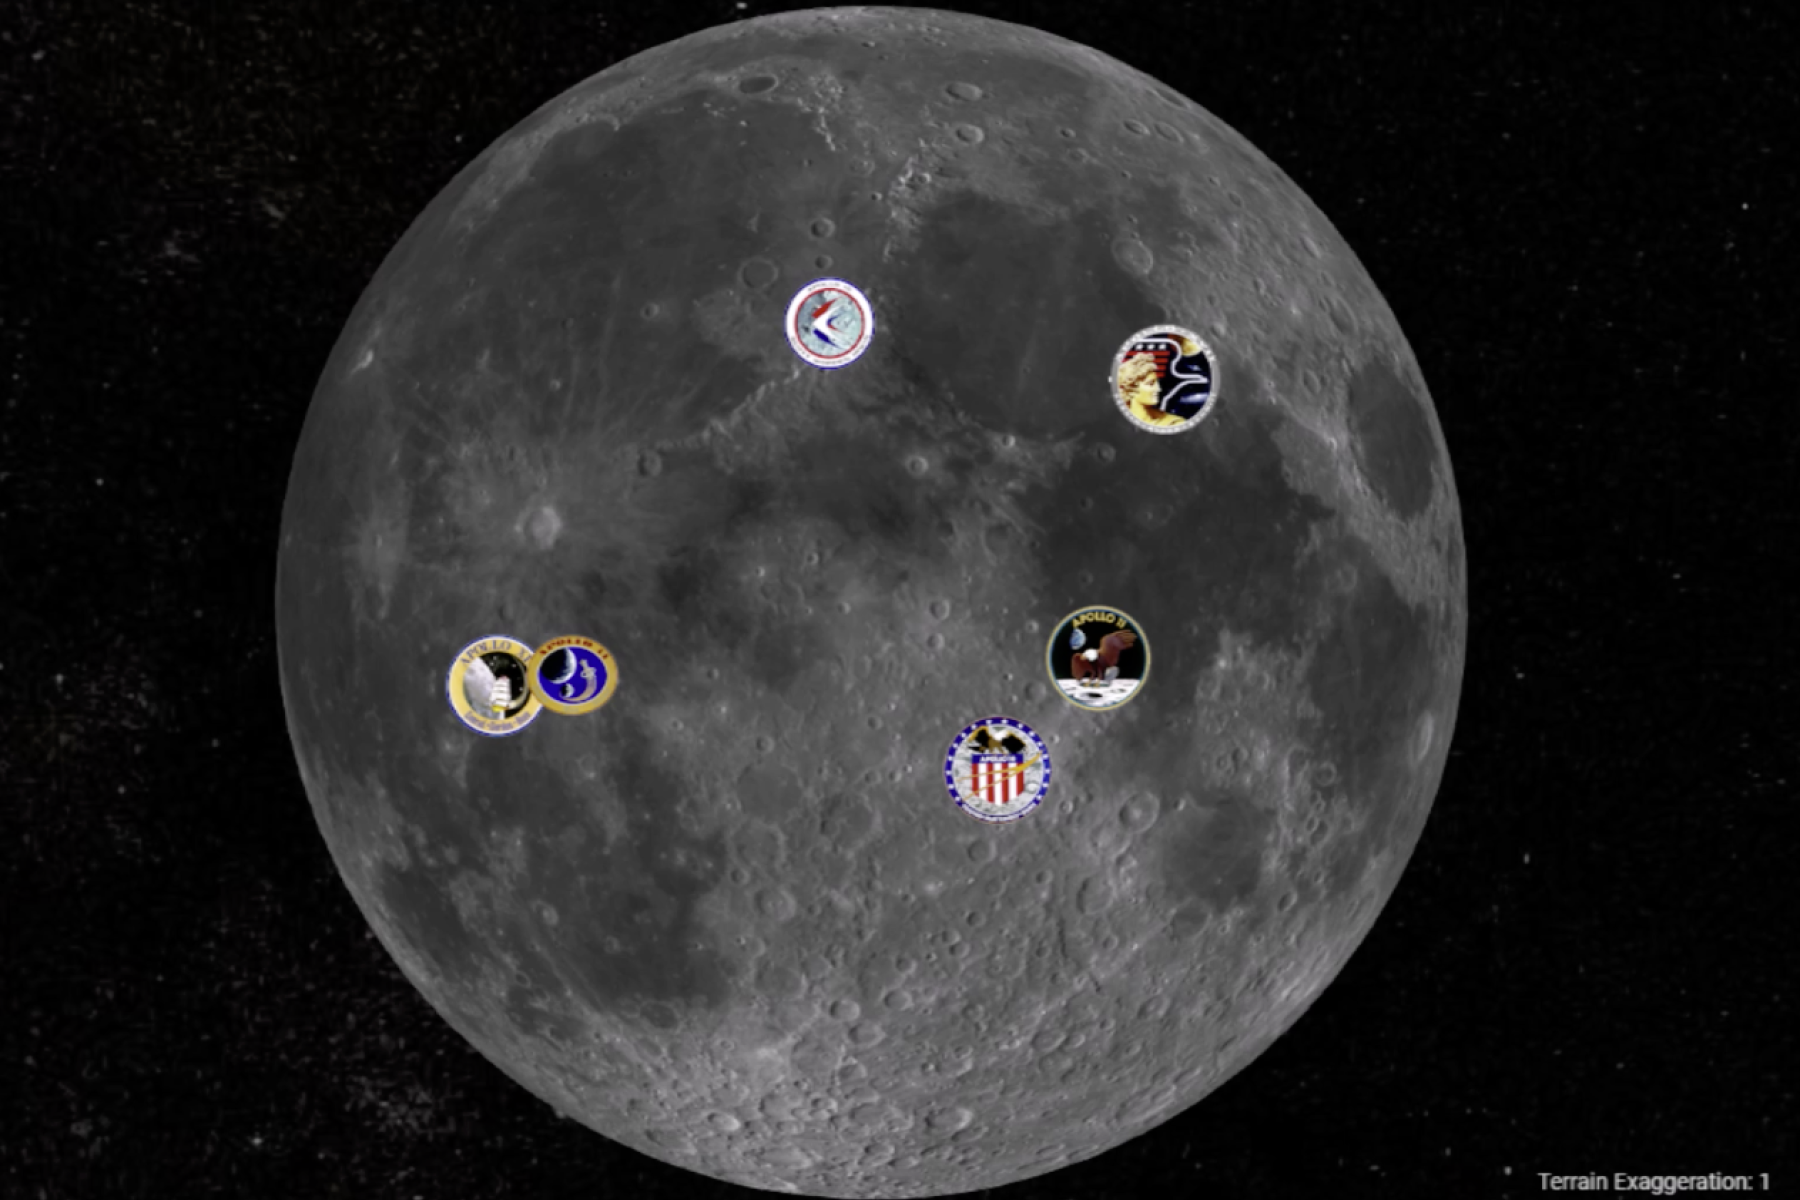 Apollo Lunar Landing Sites video still image showing locations of landing sites